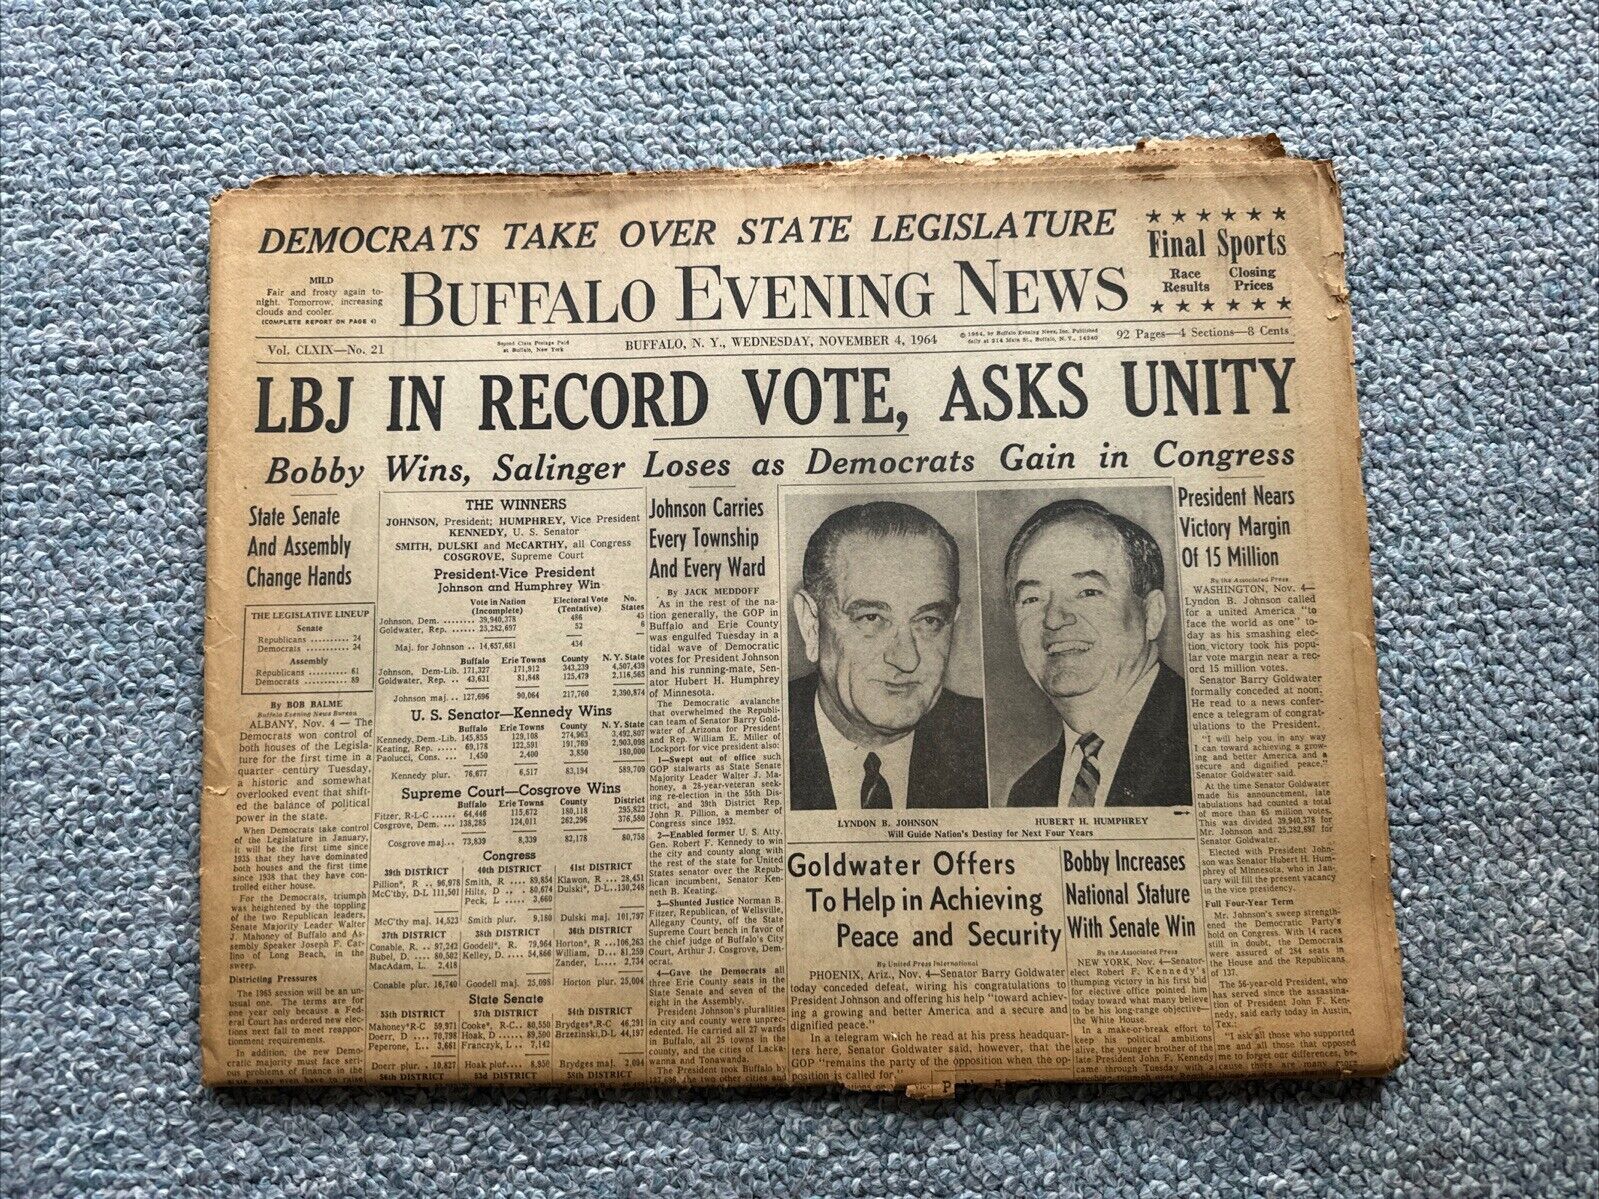 Buffalo Evening News Newspaper November 4, 1964 Buffalo, NY - LBJ Wins Vote